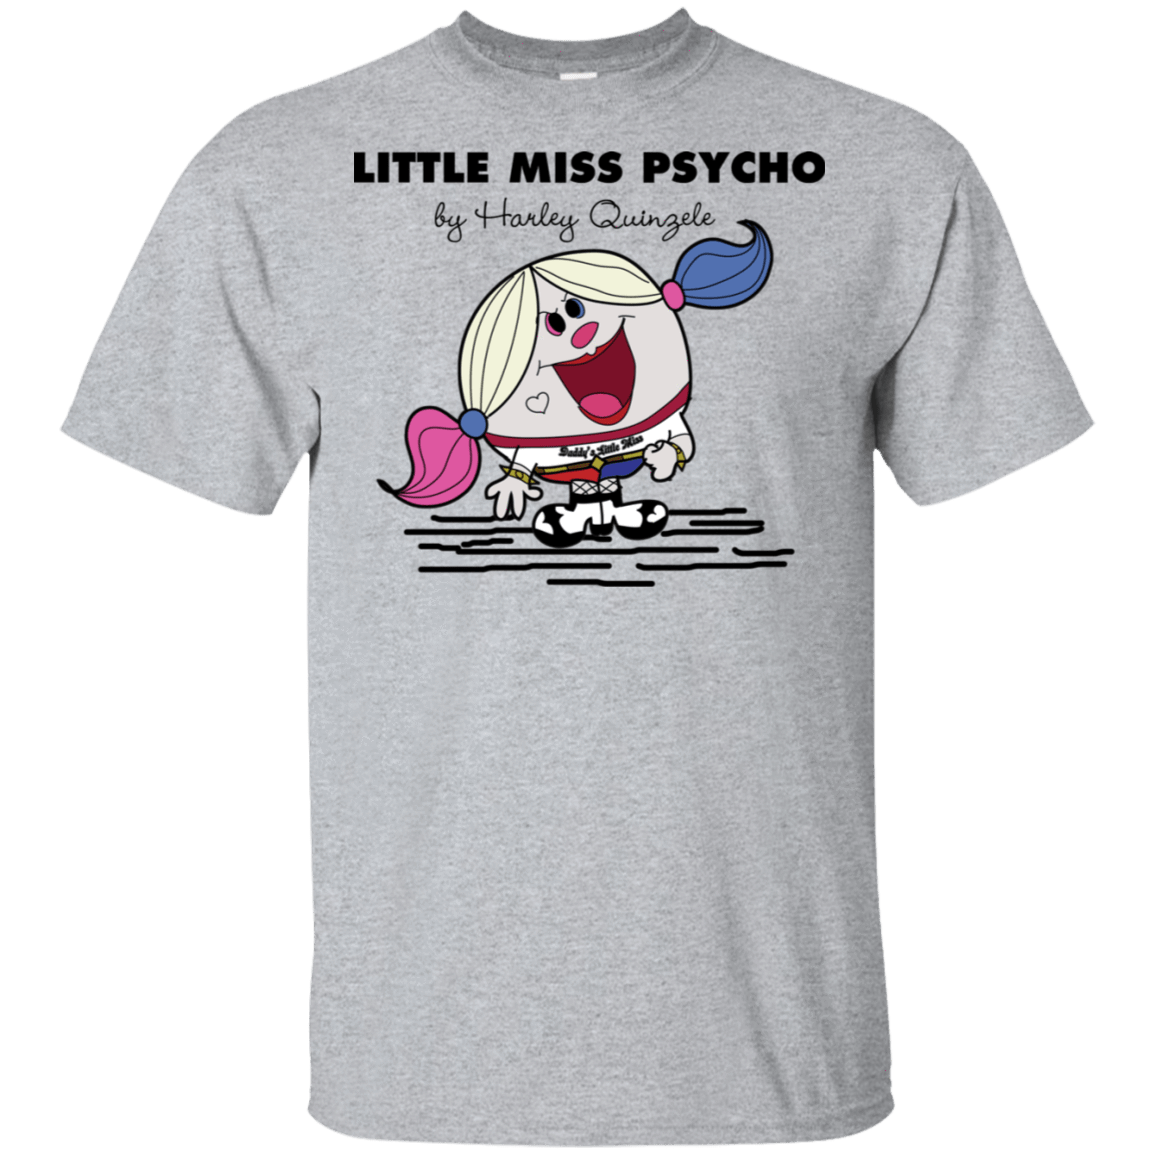 T-Shirts Sport Grey / S Little Miss Psycho T-Shirt